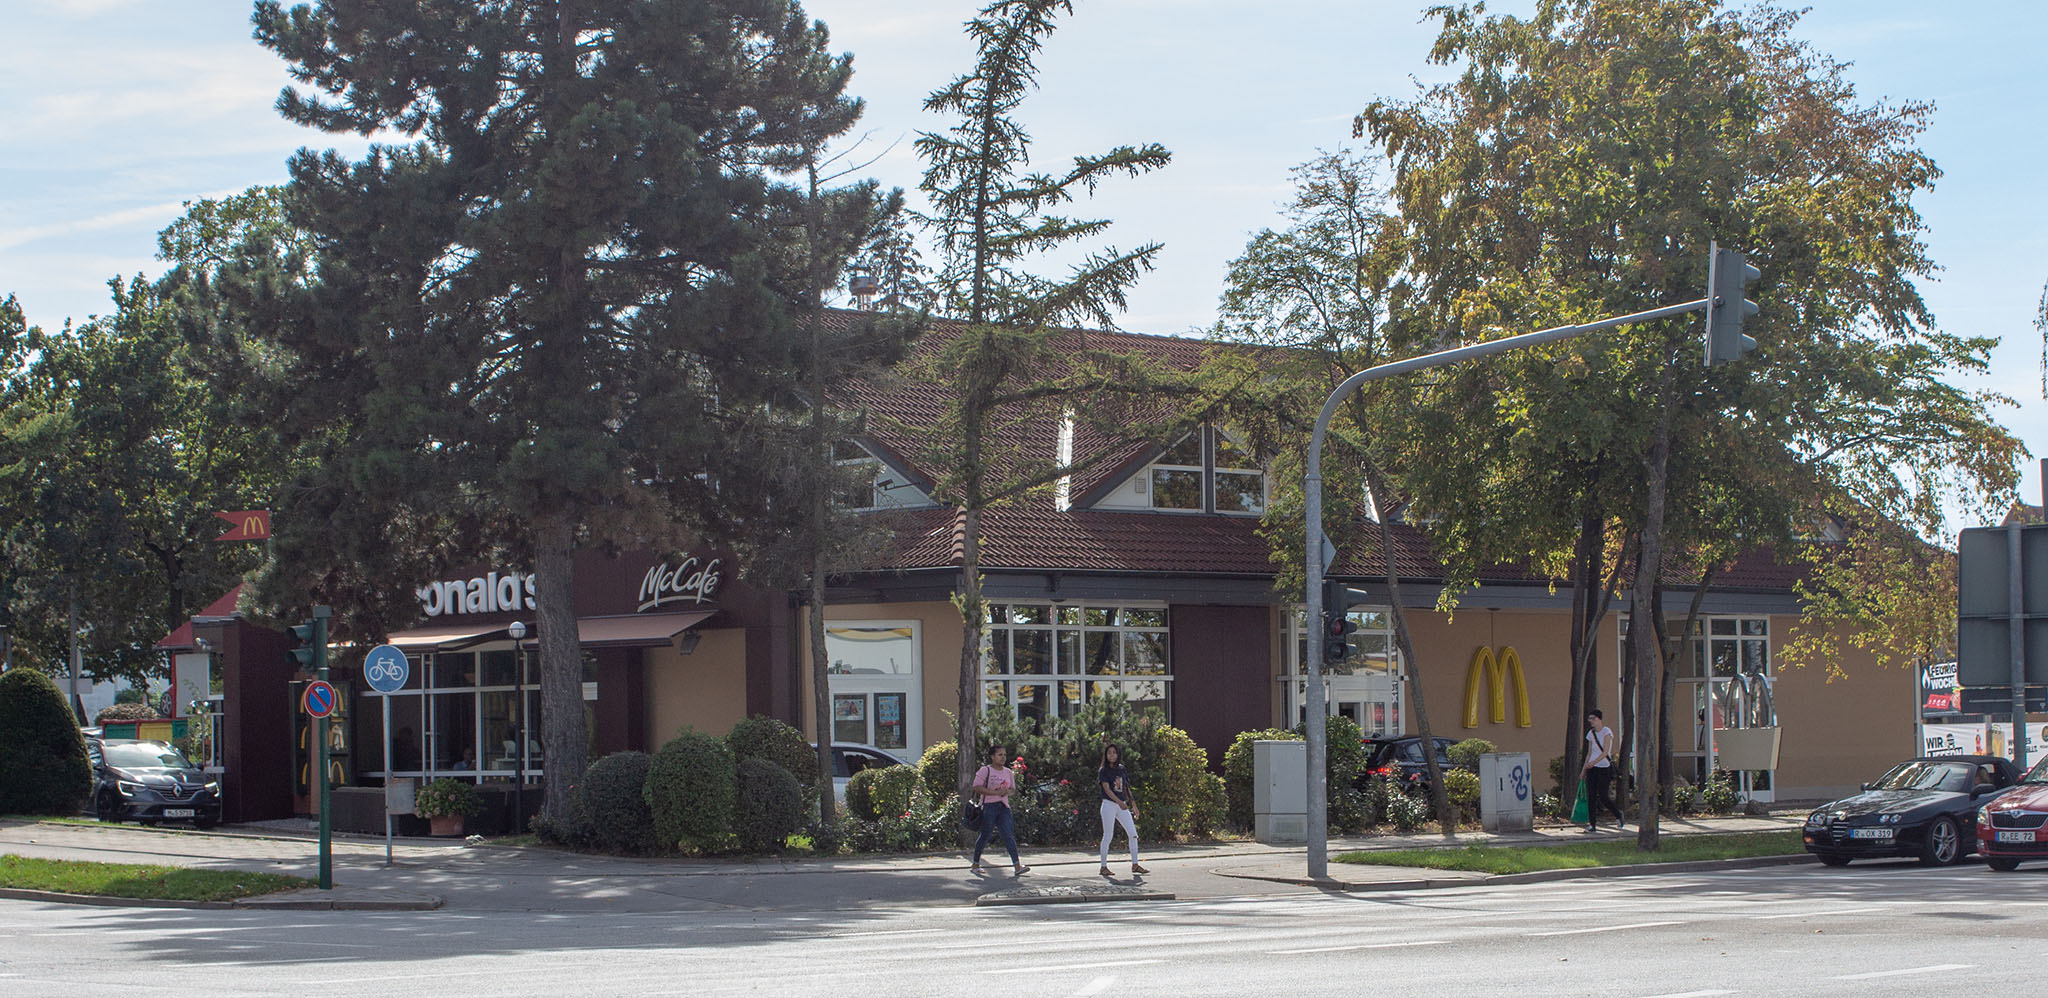 Das McDonald’s-Restaurant in Regensburg (Defreggerweg)